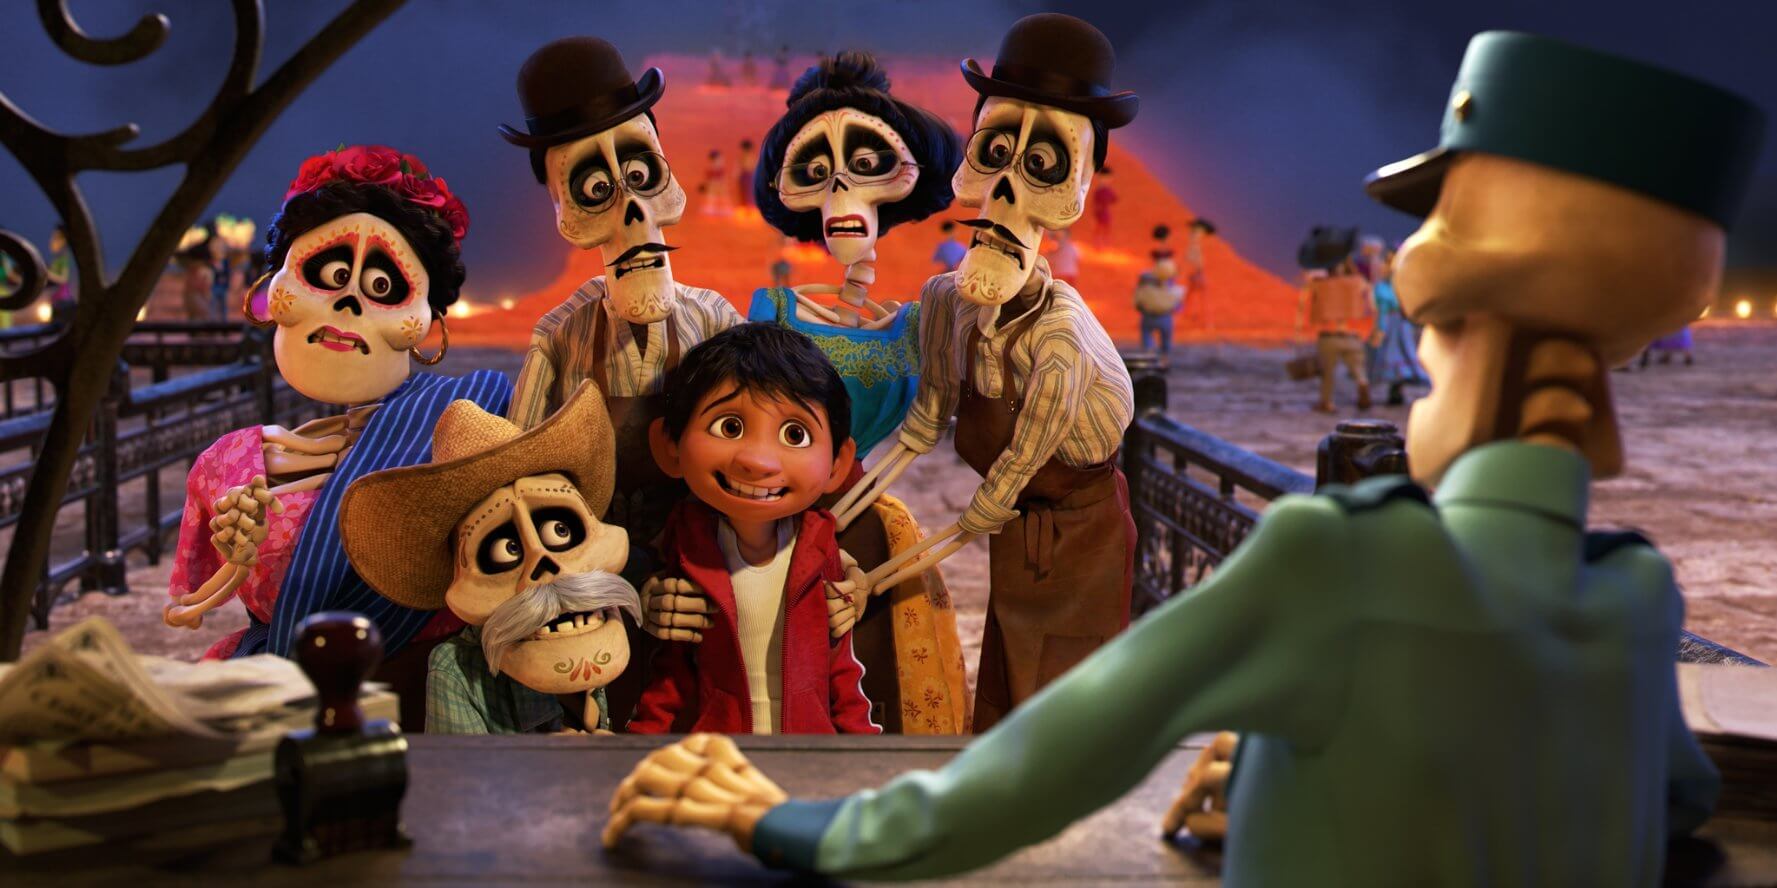 Disney.Pixar's 'Coco' Trailer Has Arrived